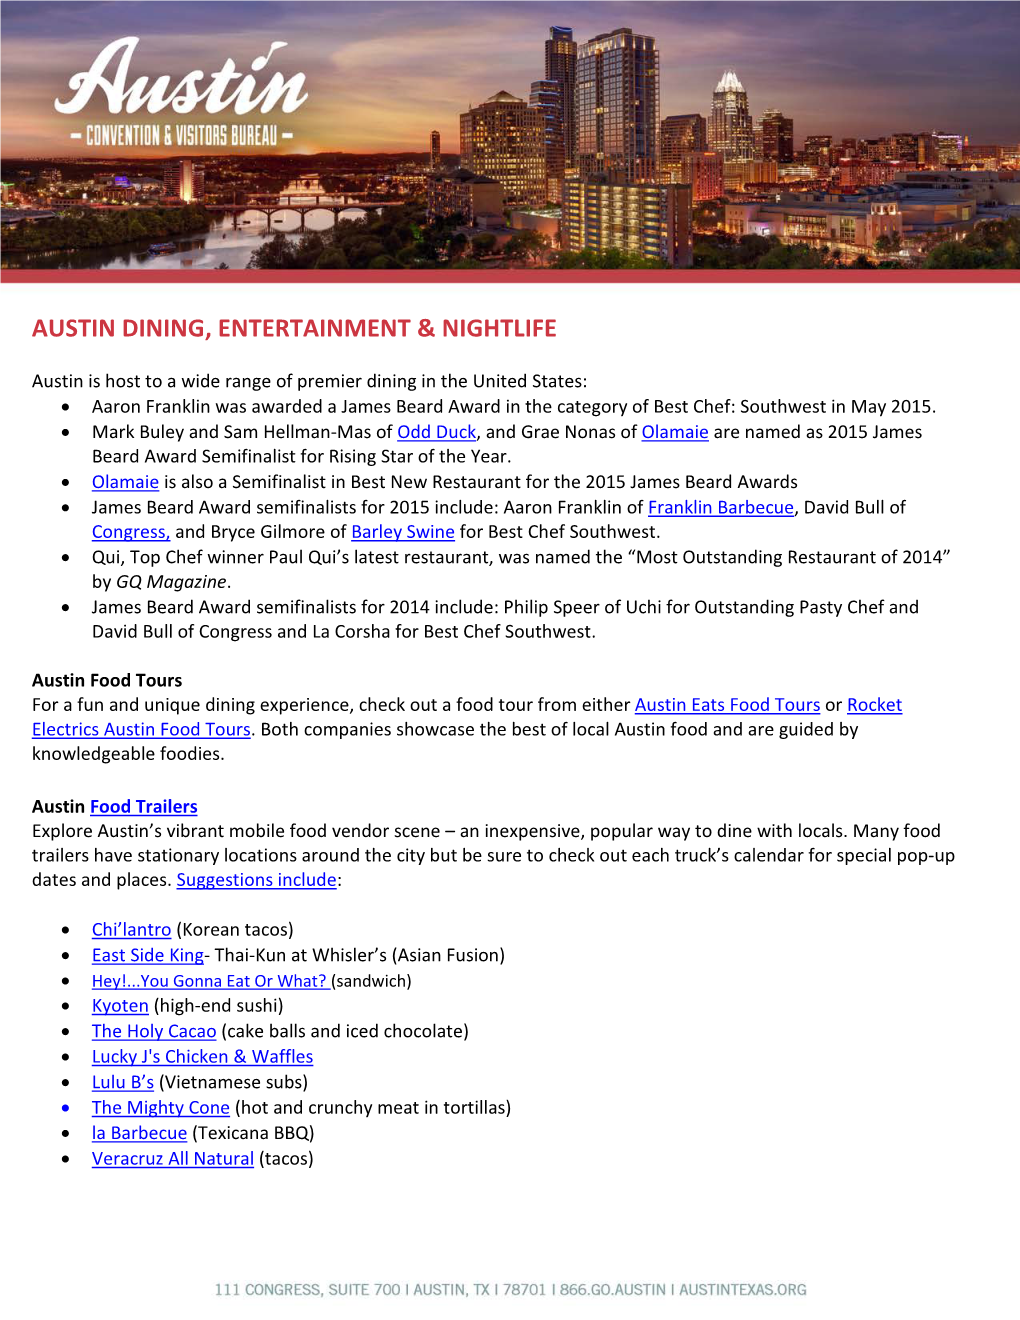 Austin Dining, Entertainment & Nightlife